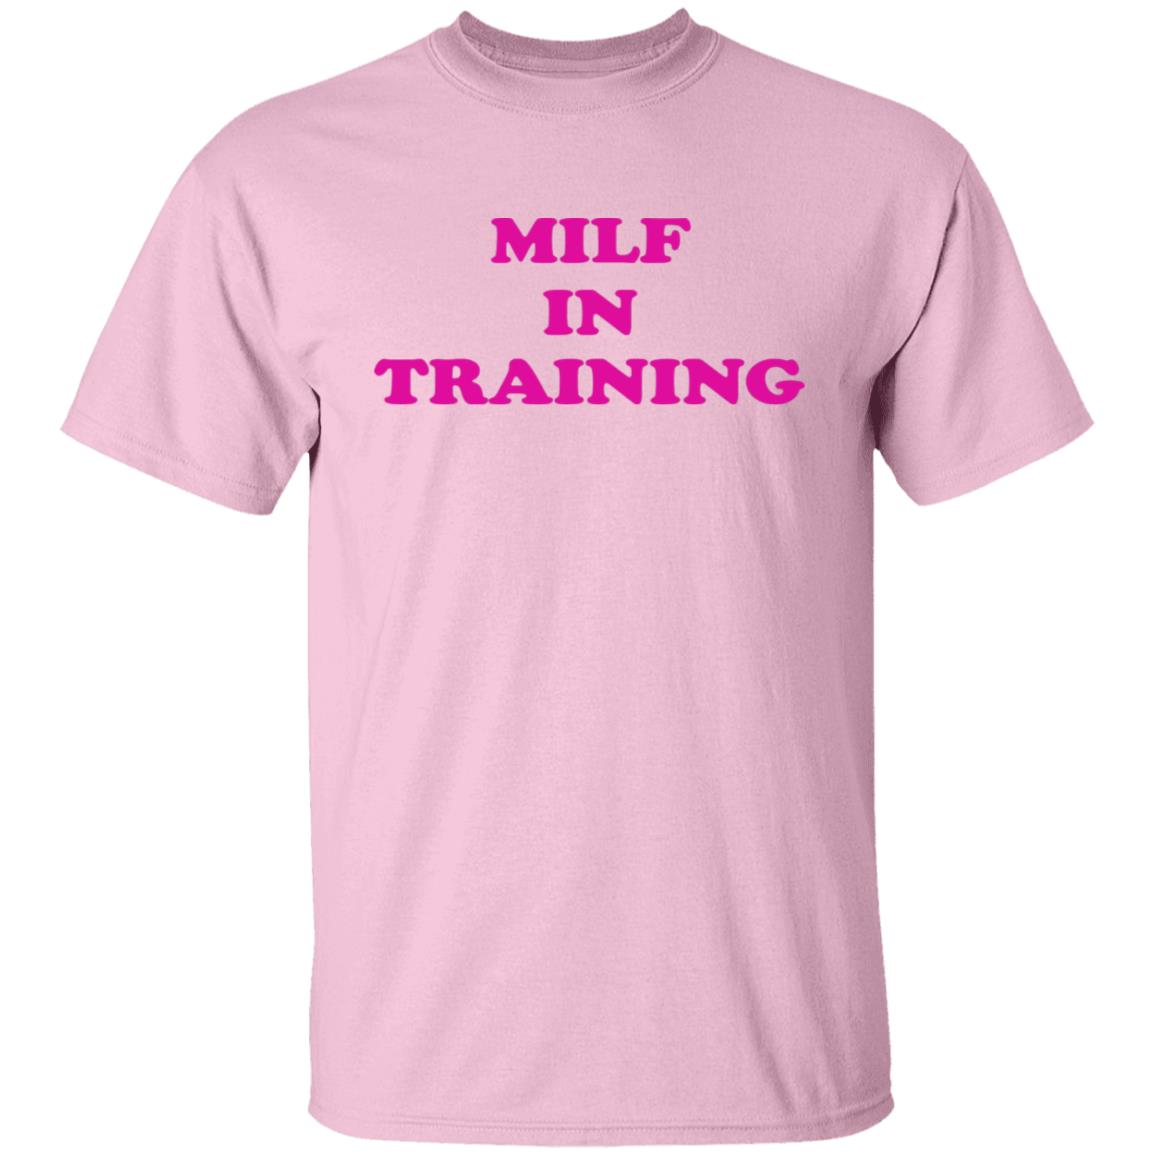 MILF Is Training Shirt